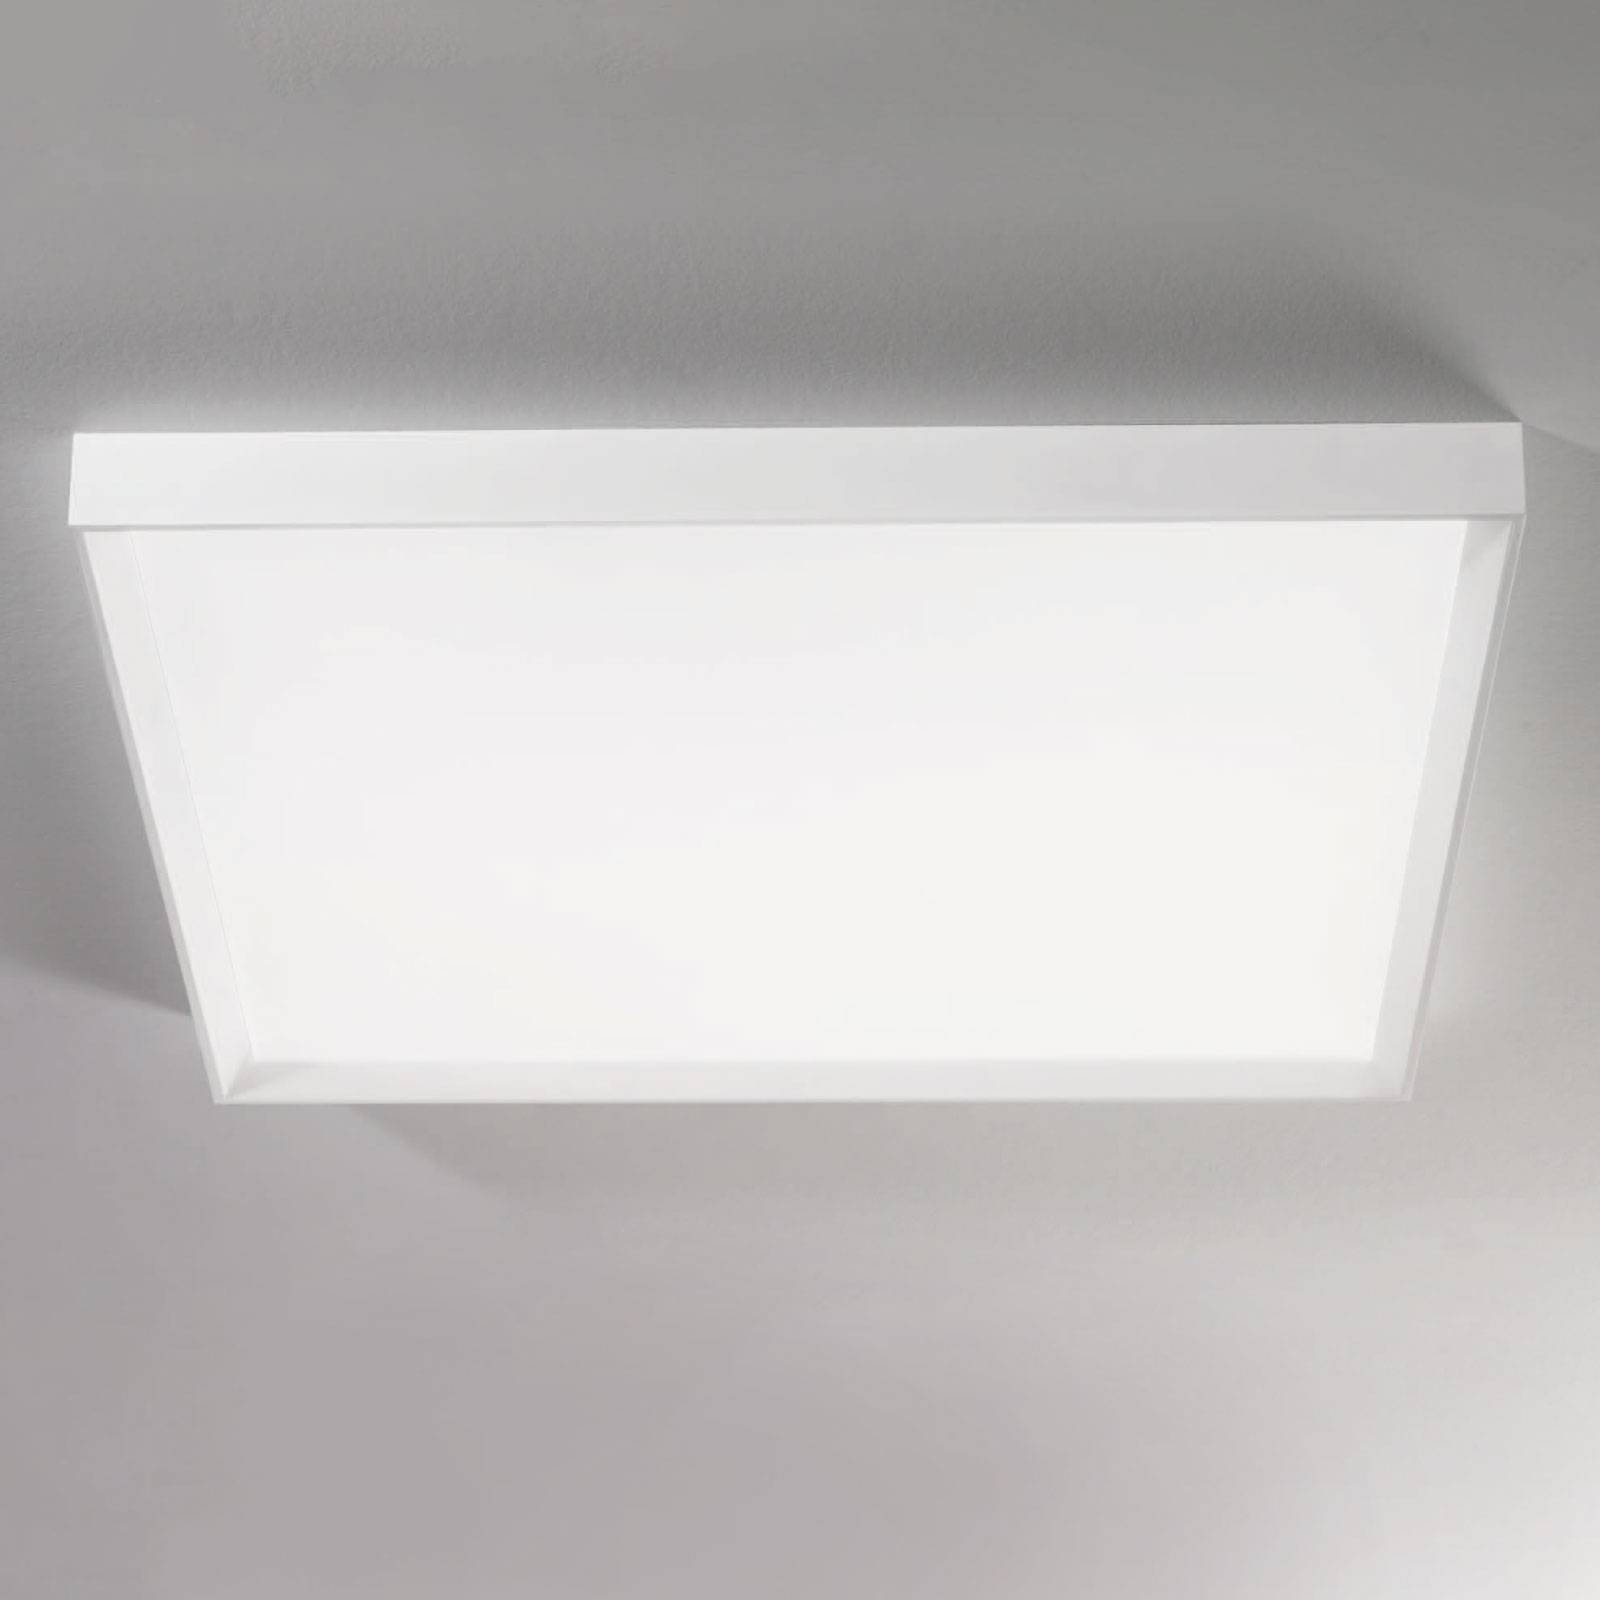 Lampa sufitowa LED Tara mega, 89 cm x 89 cm